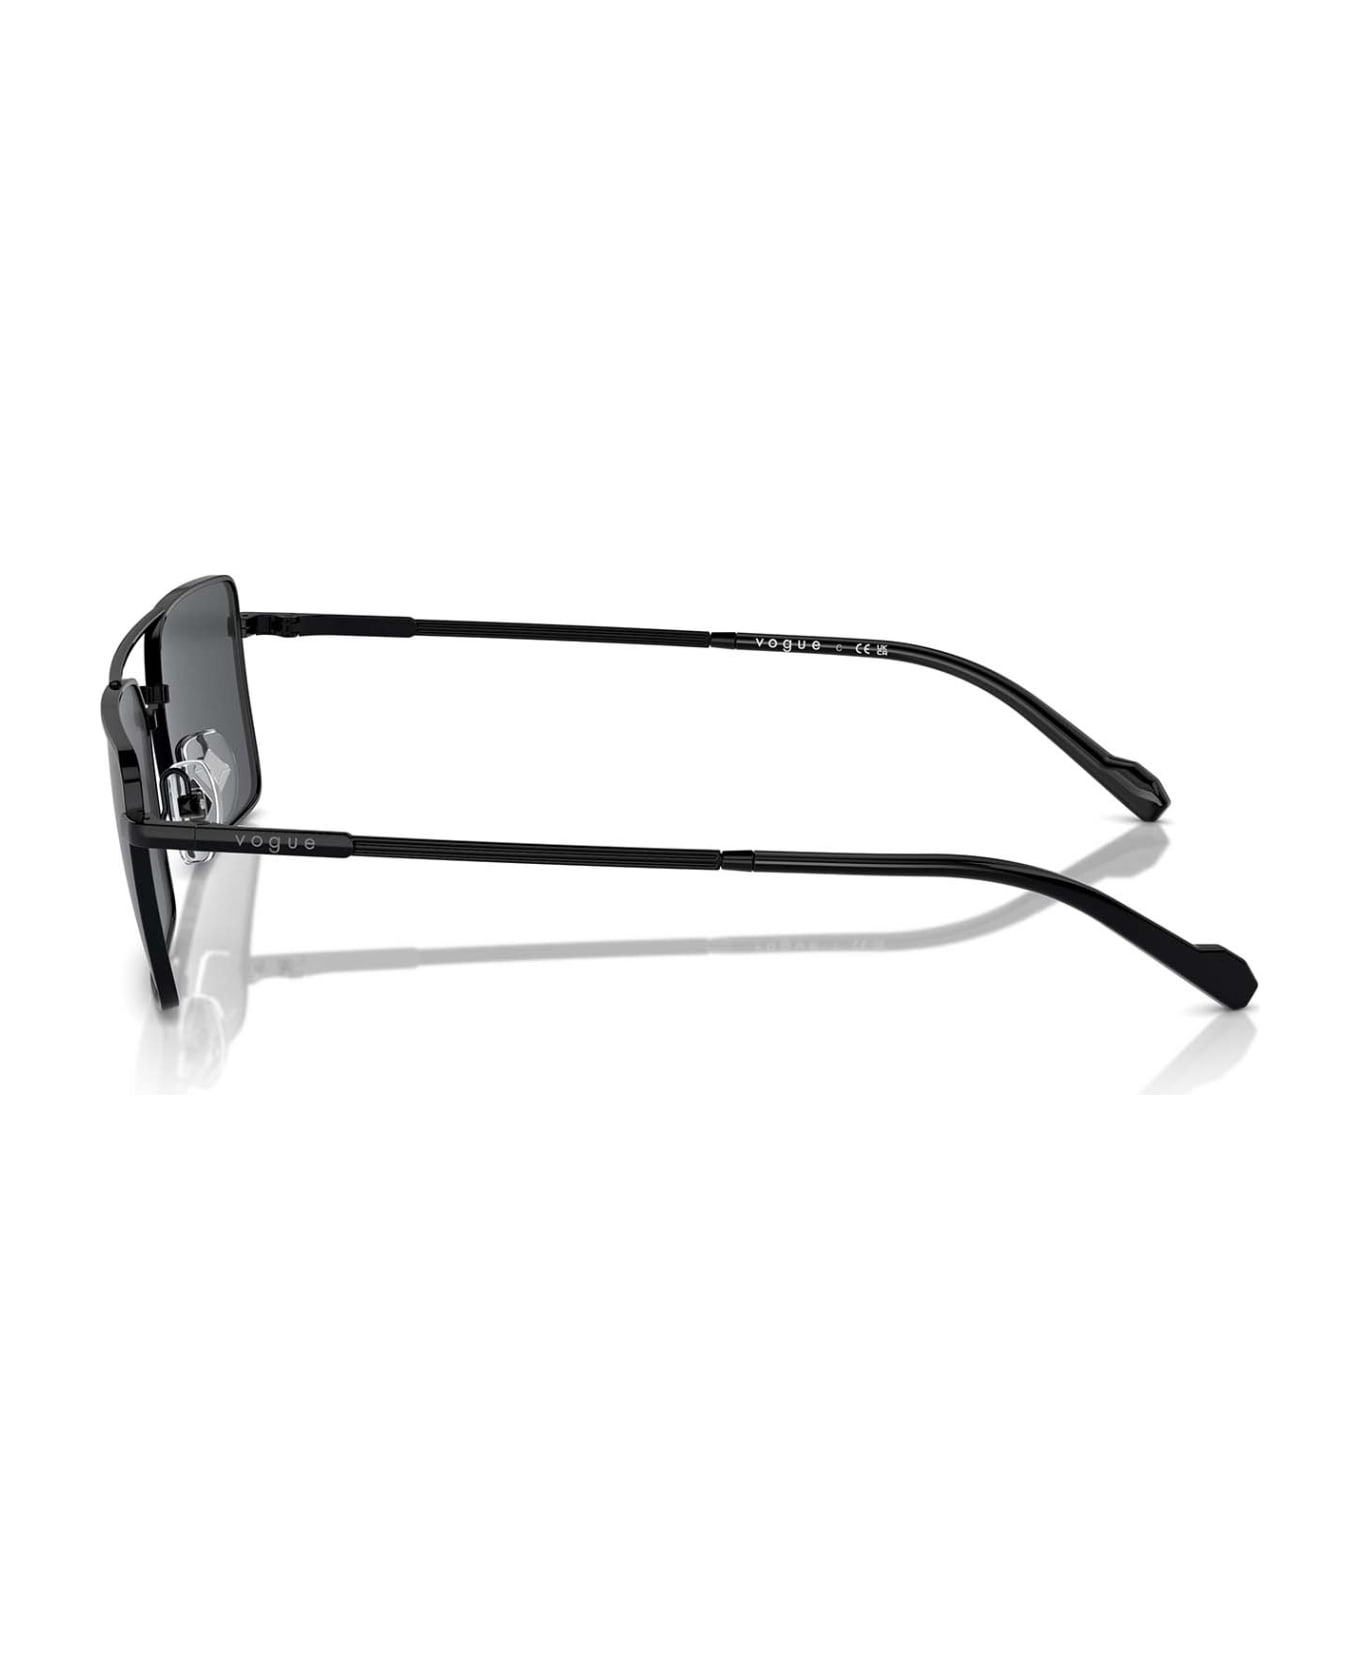 Vogue Eyewear Vo4309s Black Sunglasses - Black サングラス